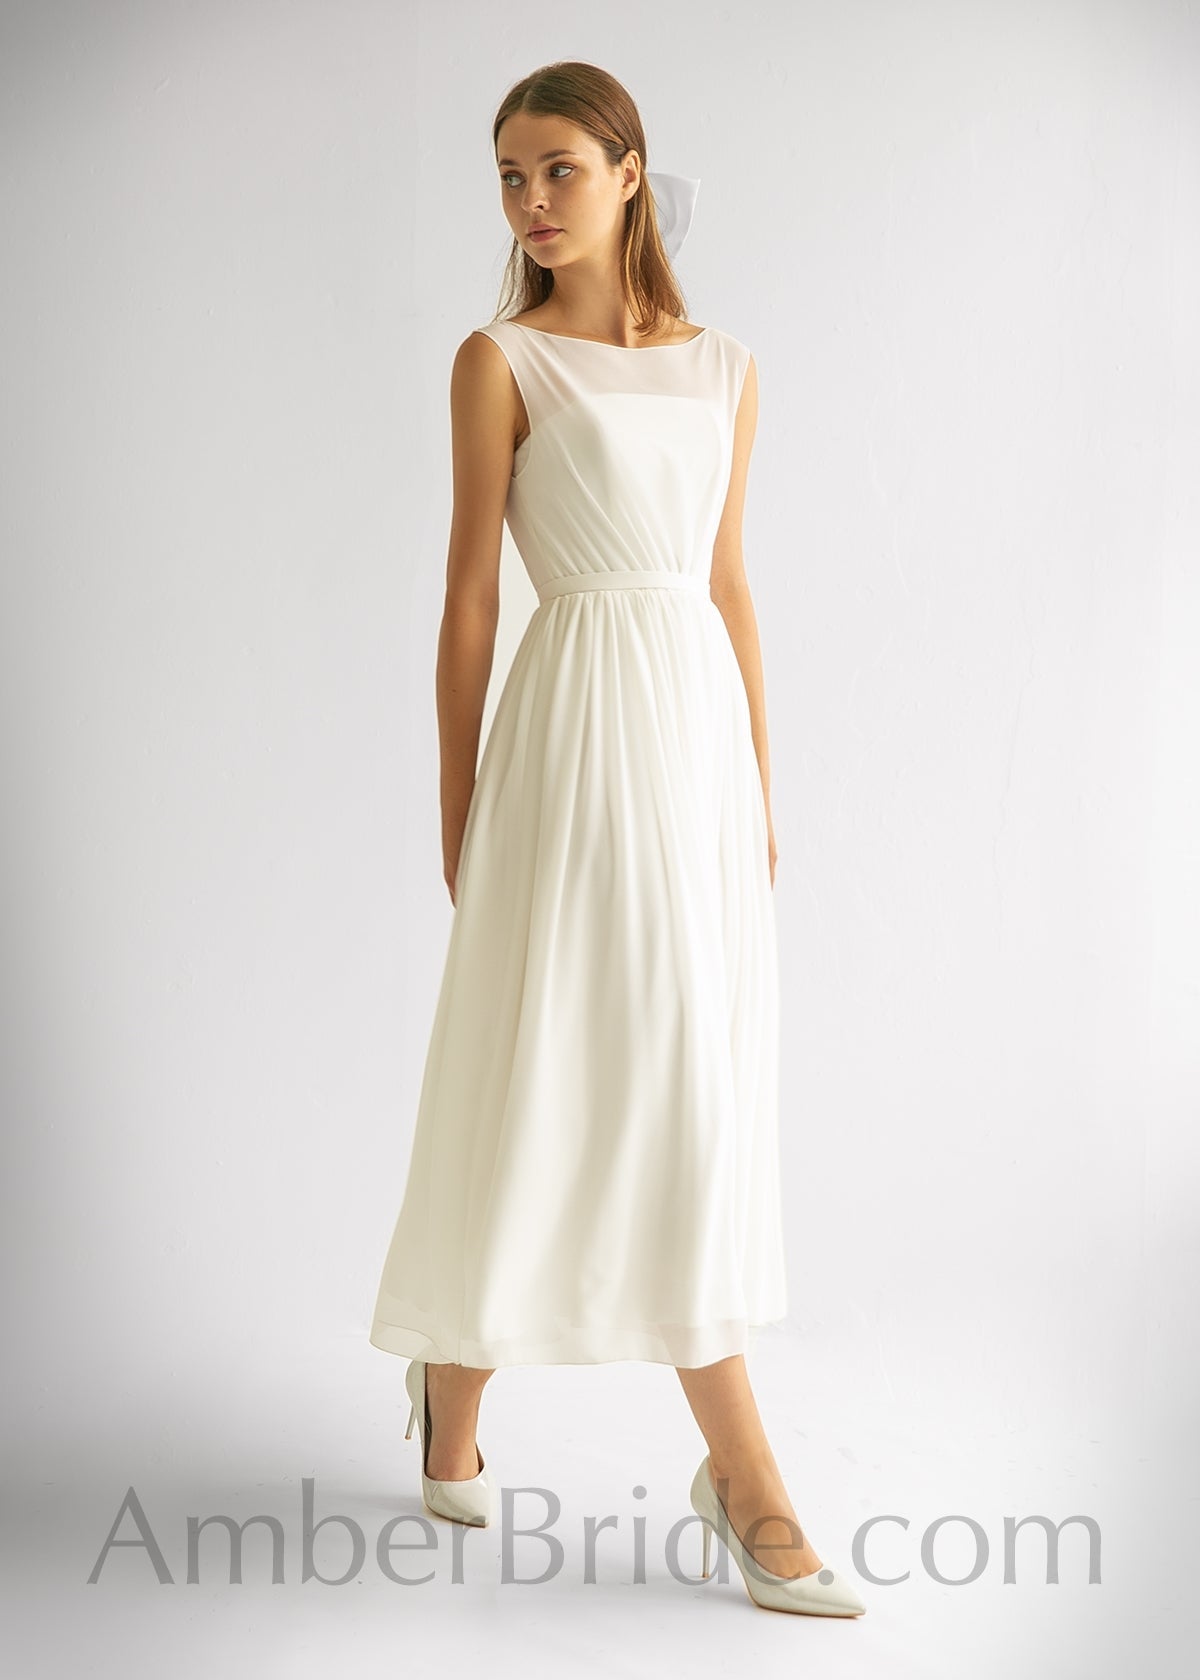 Simple A Line Tea Length Short Sleeveless Chiffon Wedding Dress - AmberBride